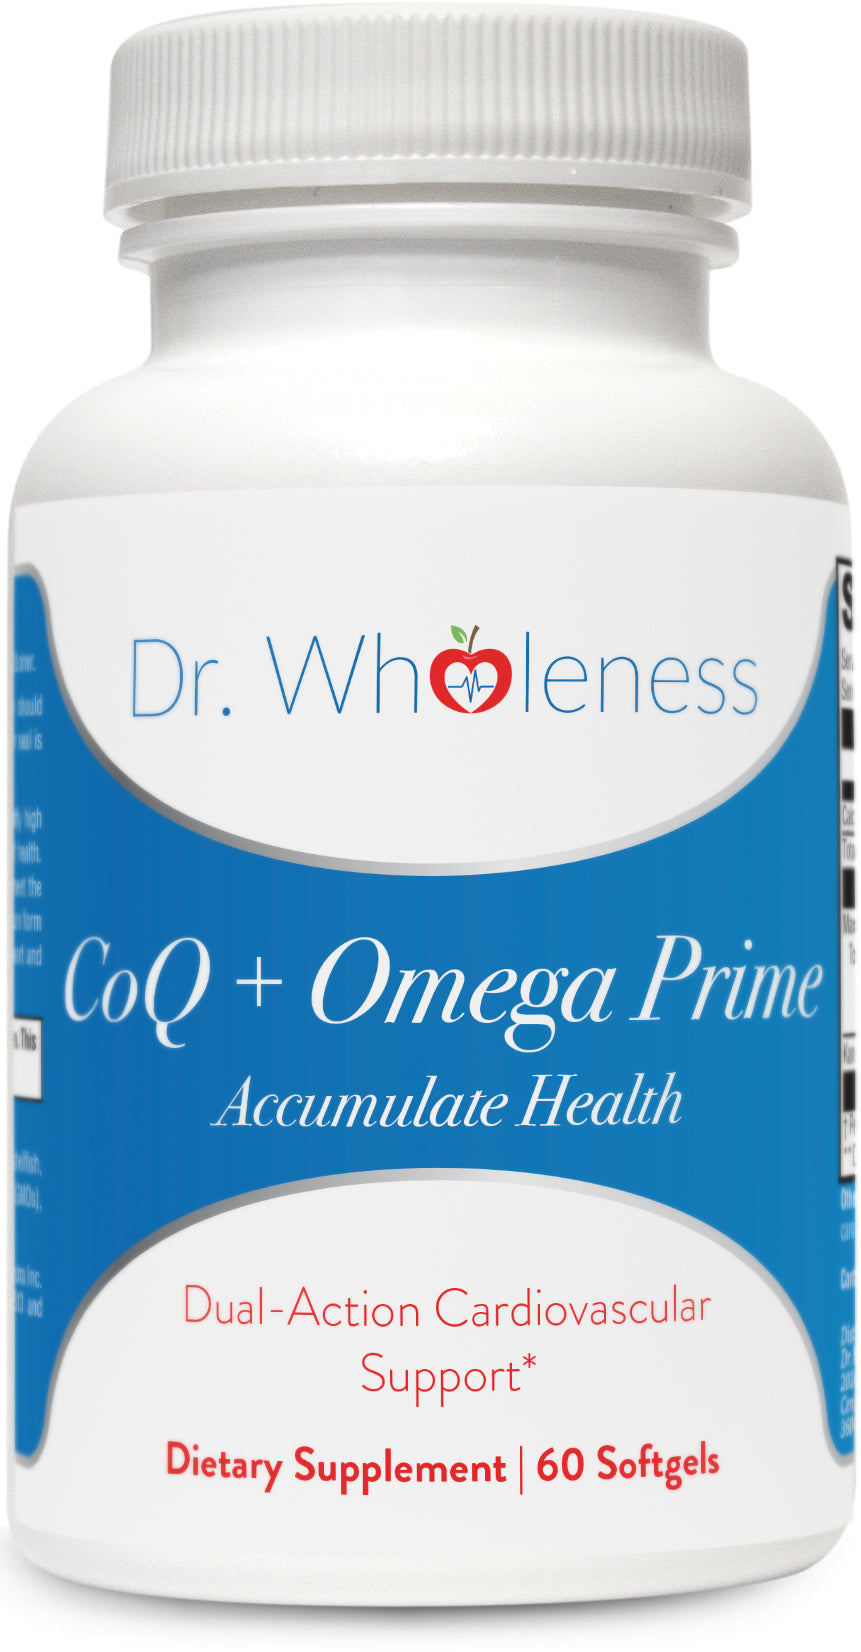 CoQ + Omega Prime